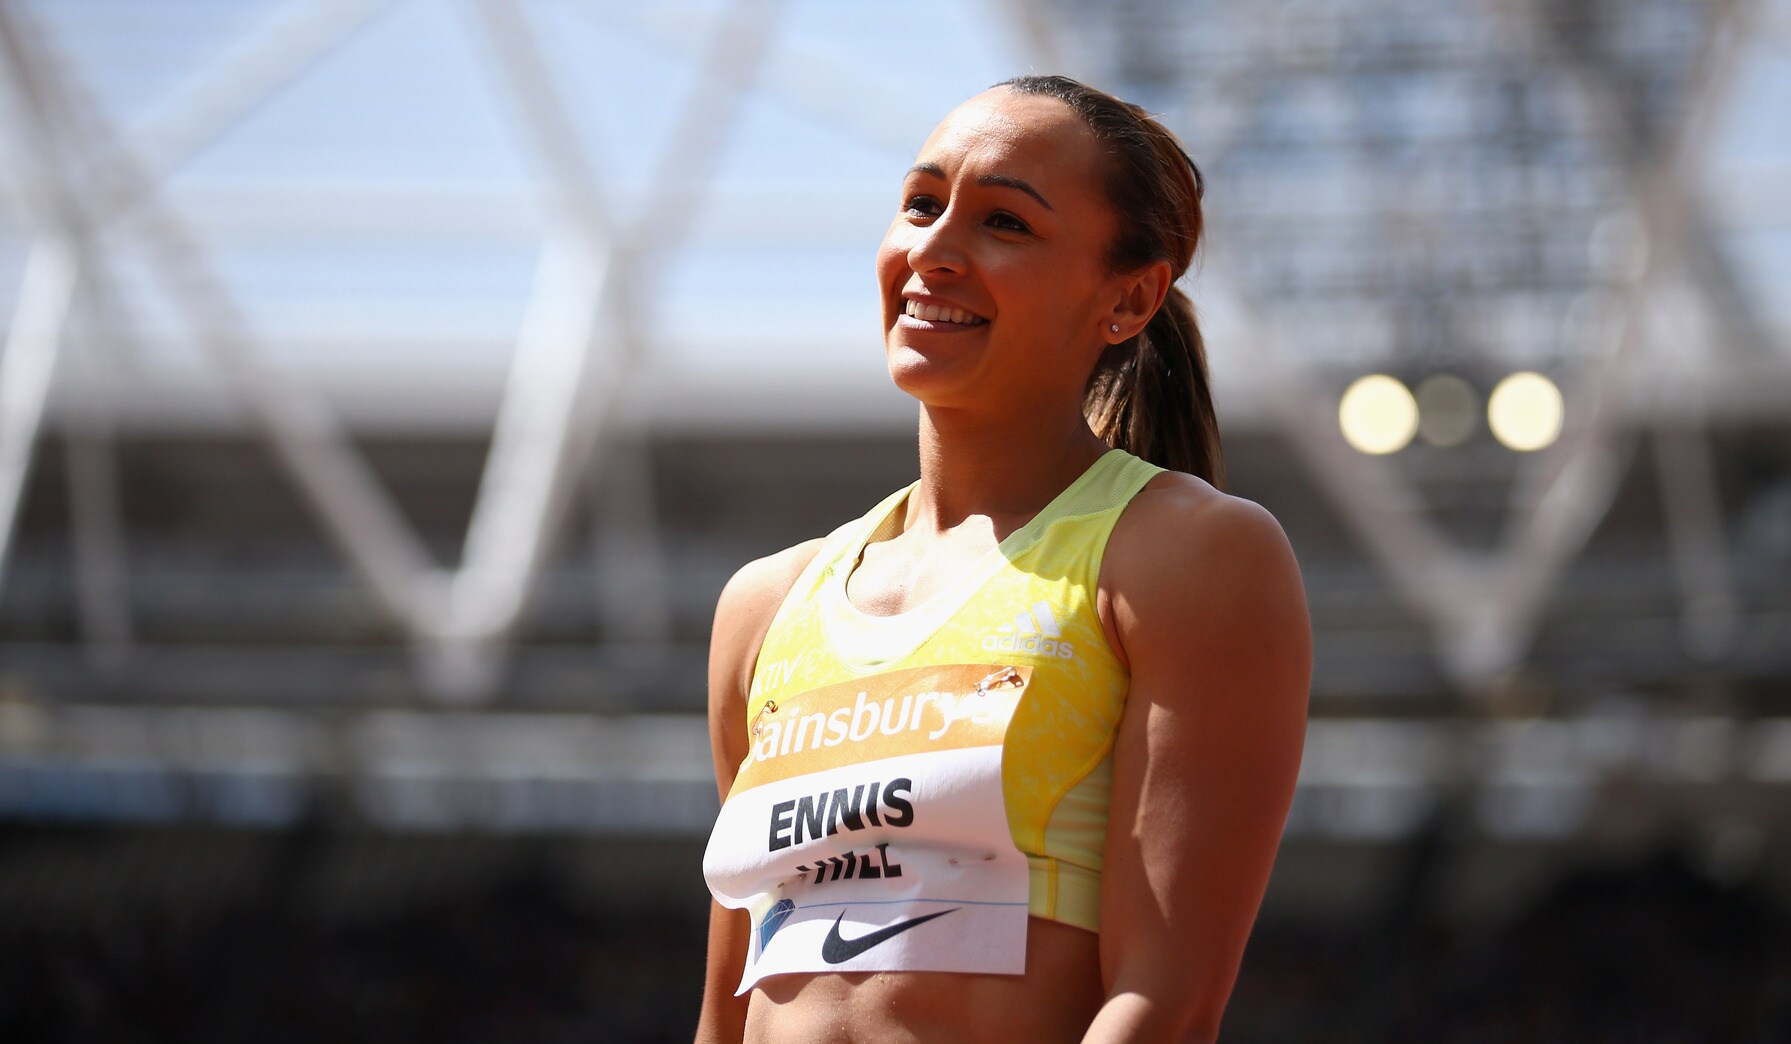 Olympisch kampioene Ennis-Hill naar WK atletiek